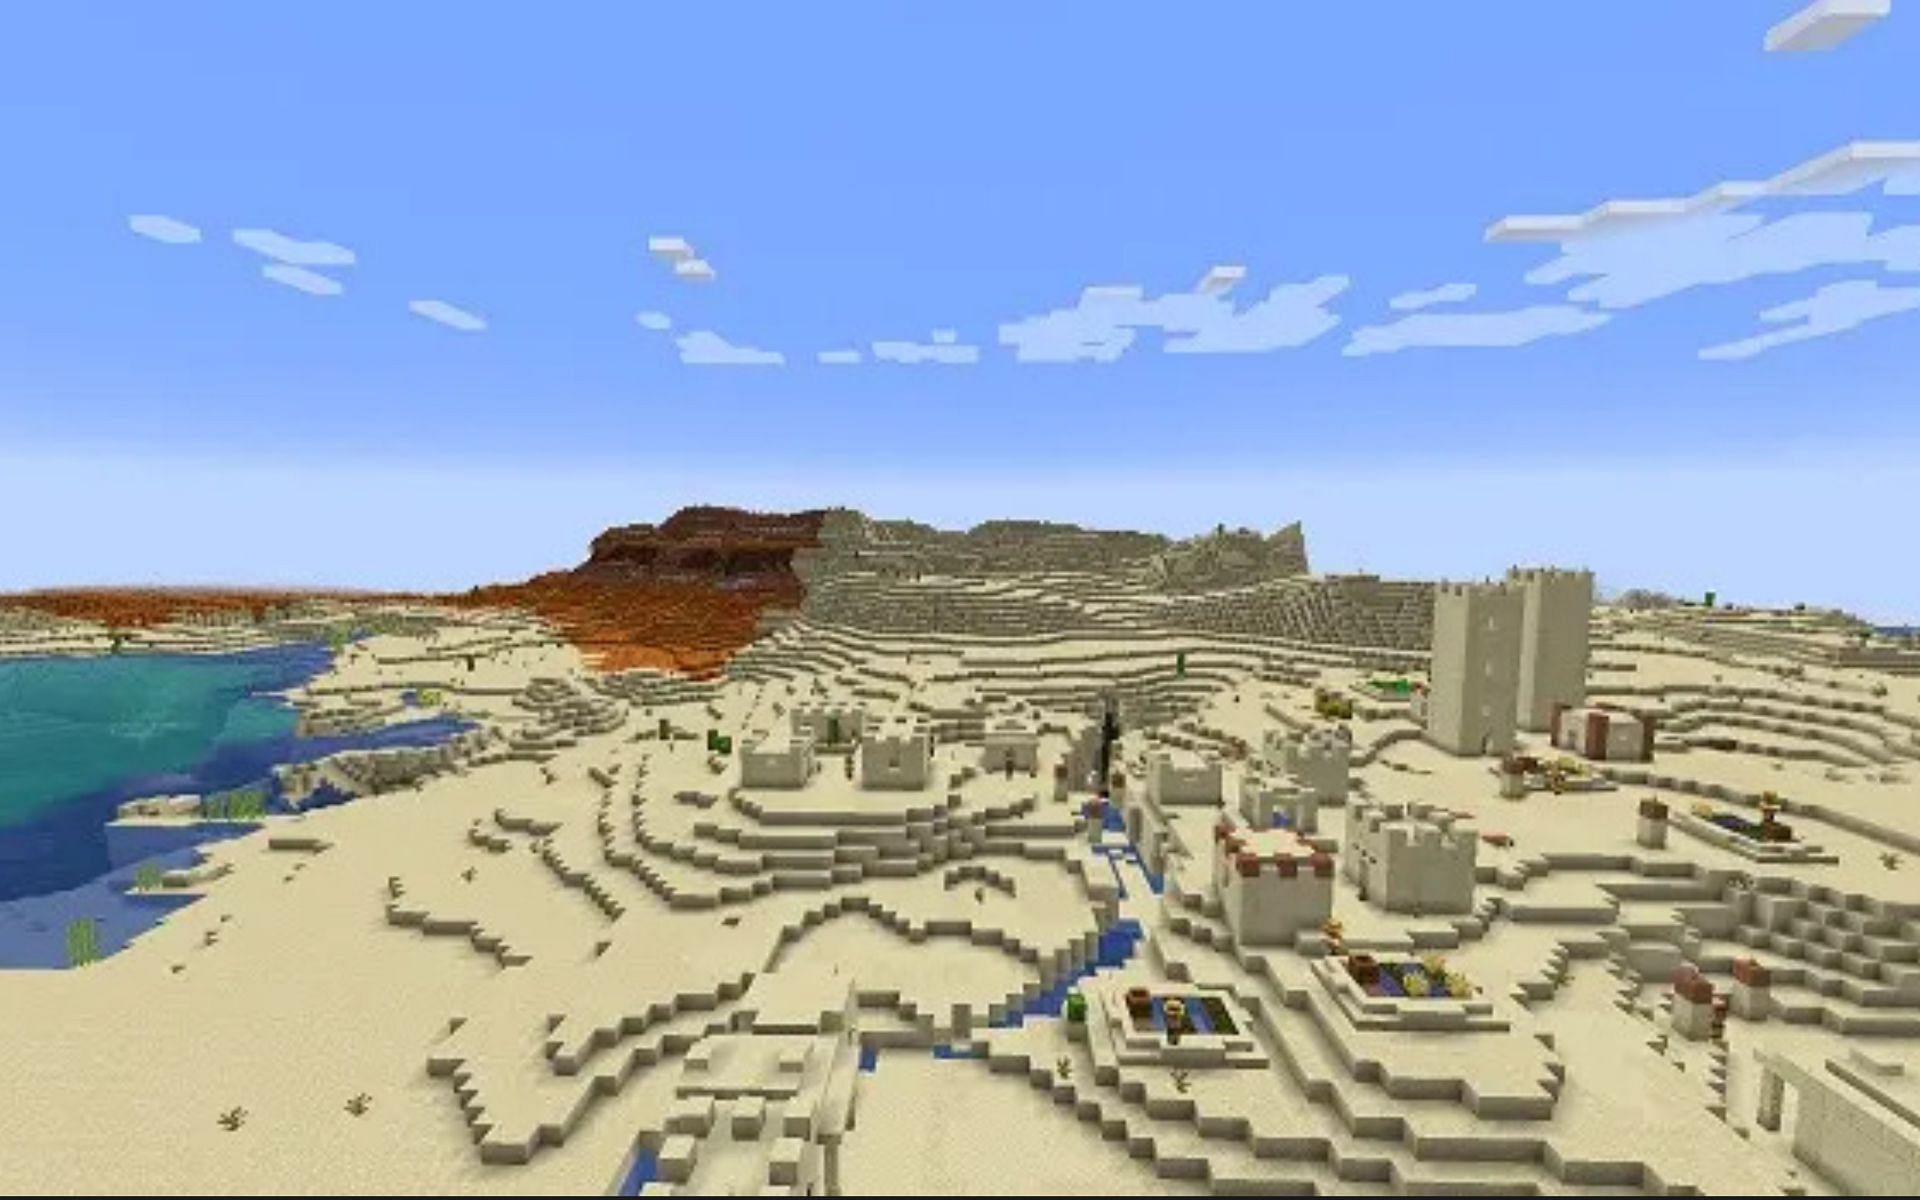 The large desert seed (Image via Minecraft)